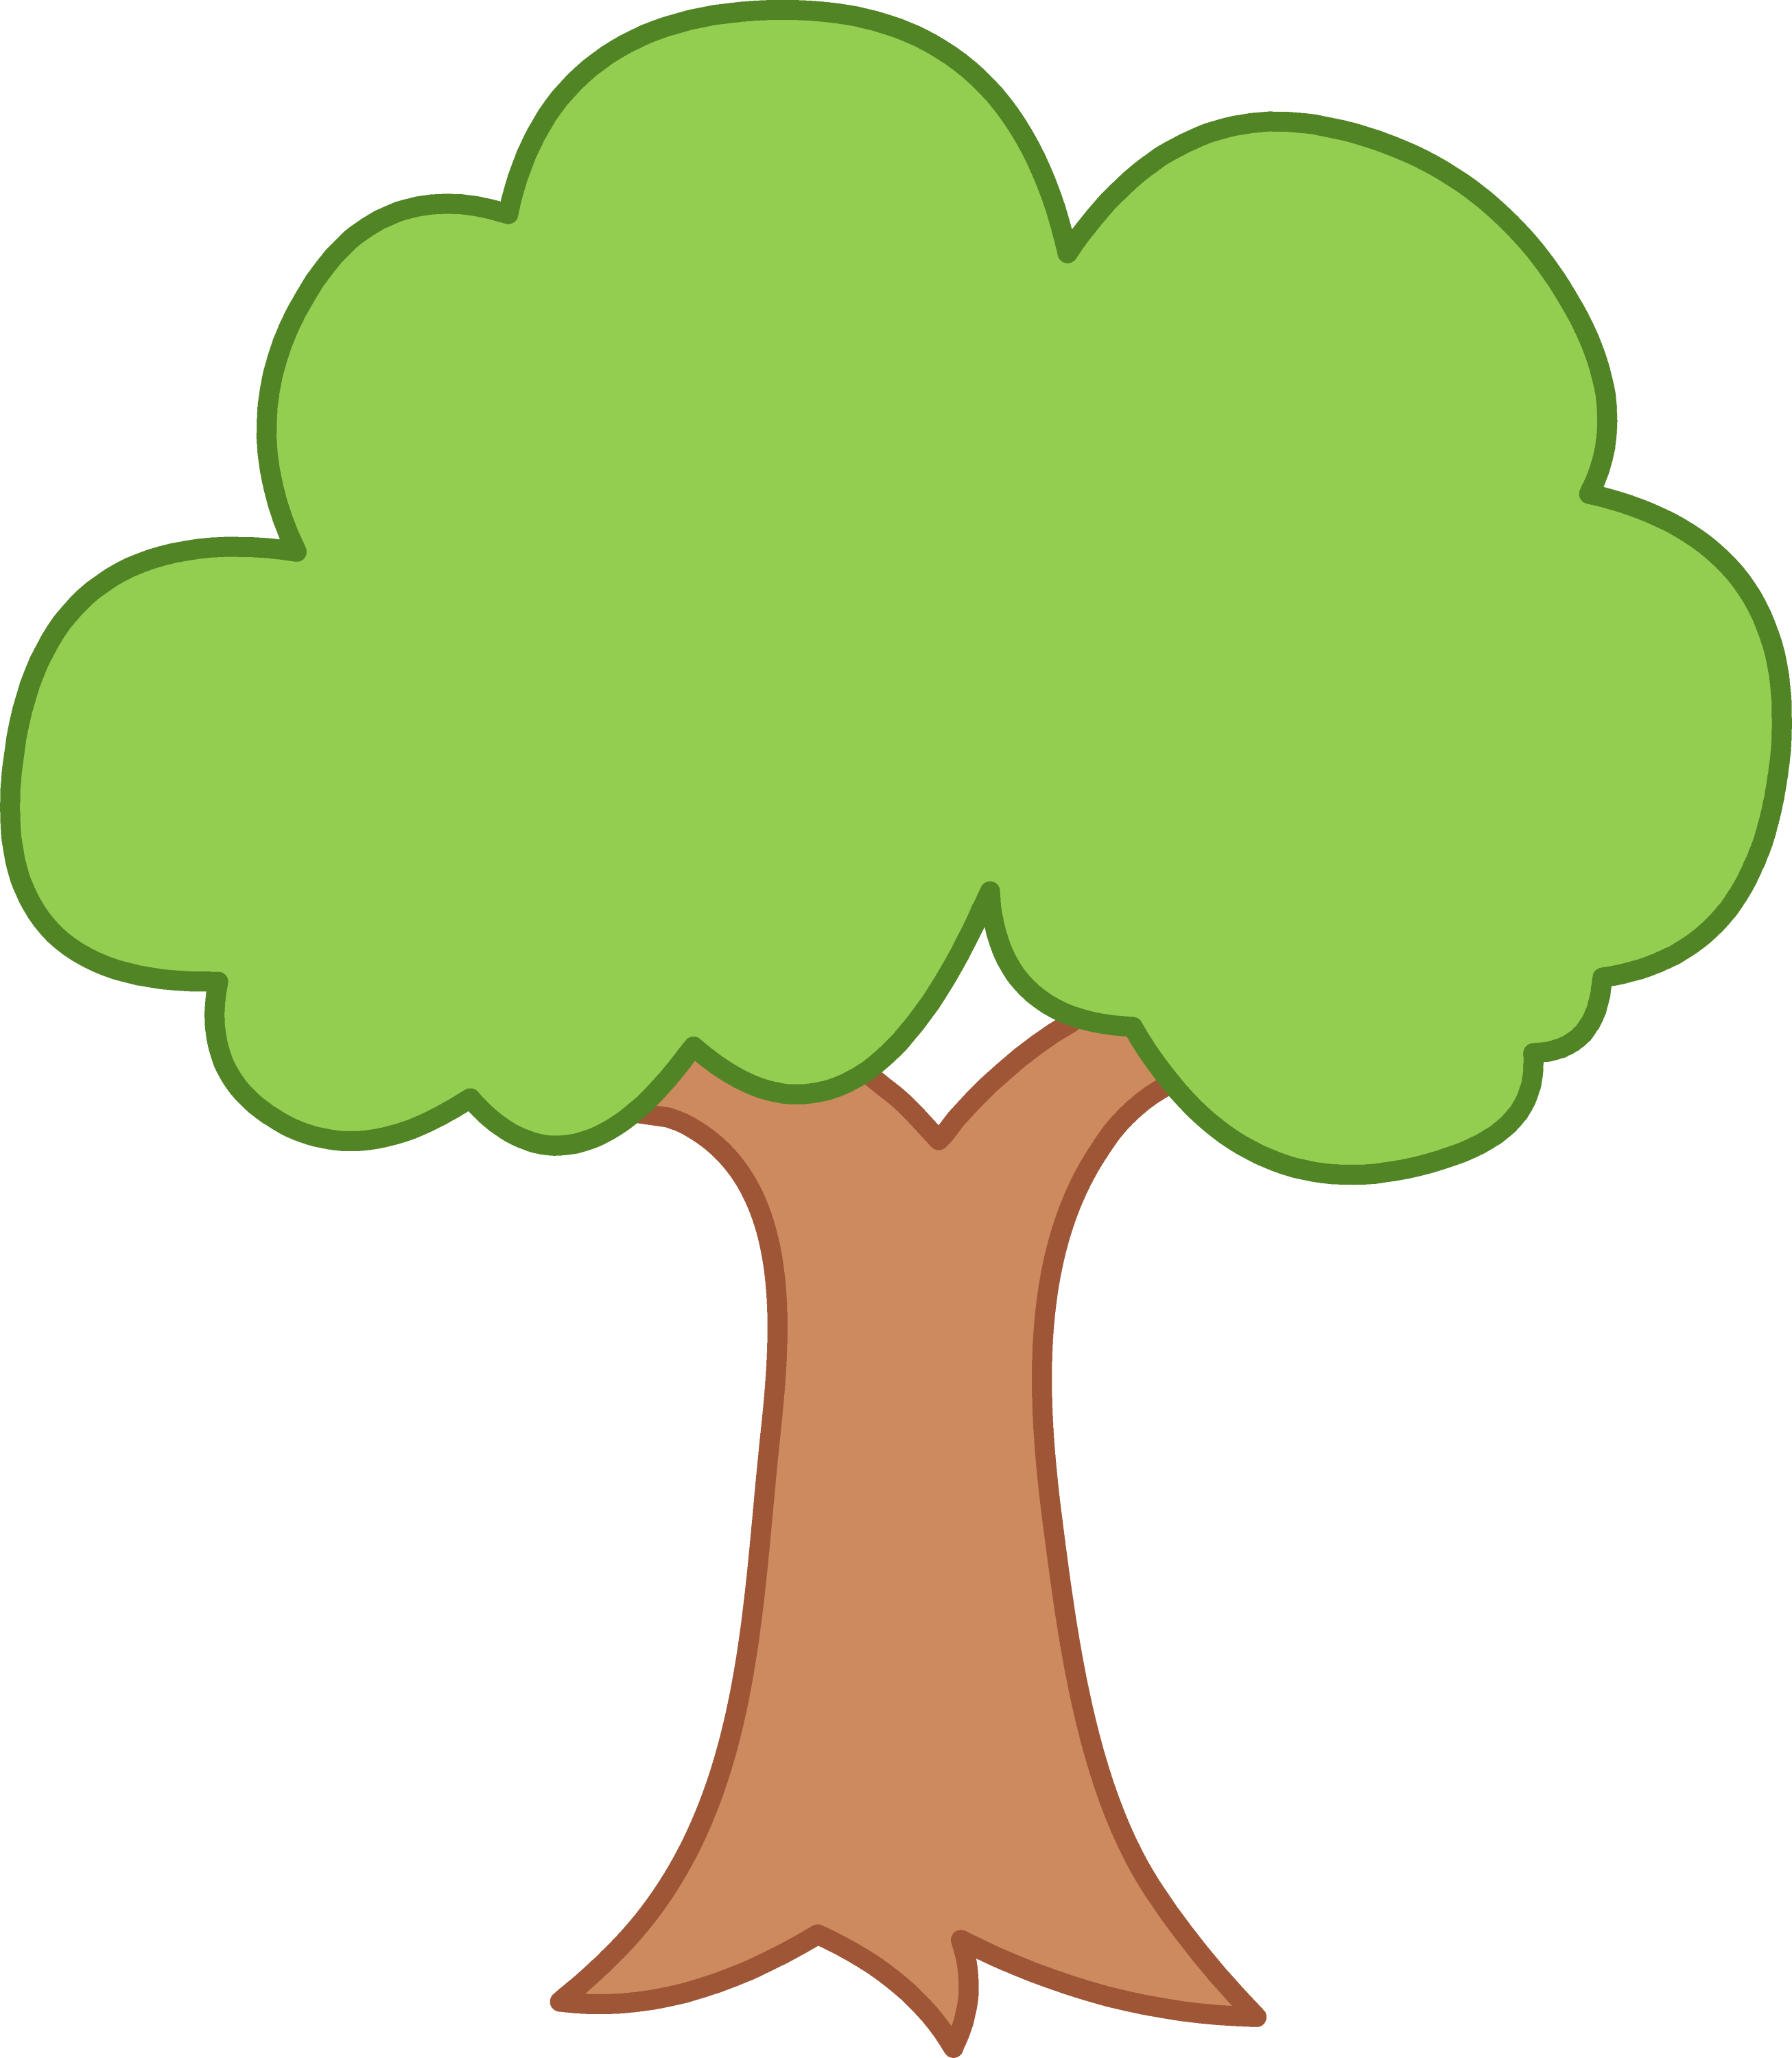 Simple Green Tree Design - Free Clip Art